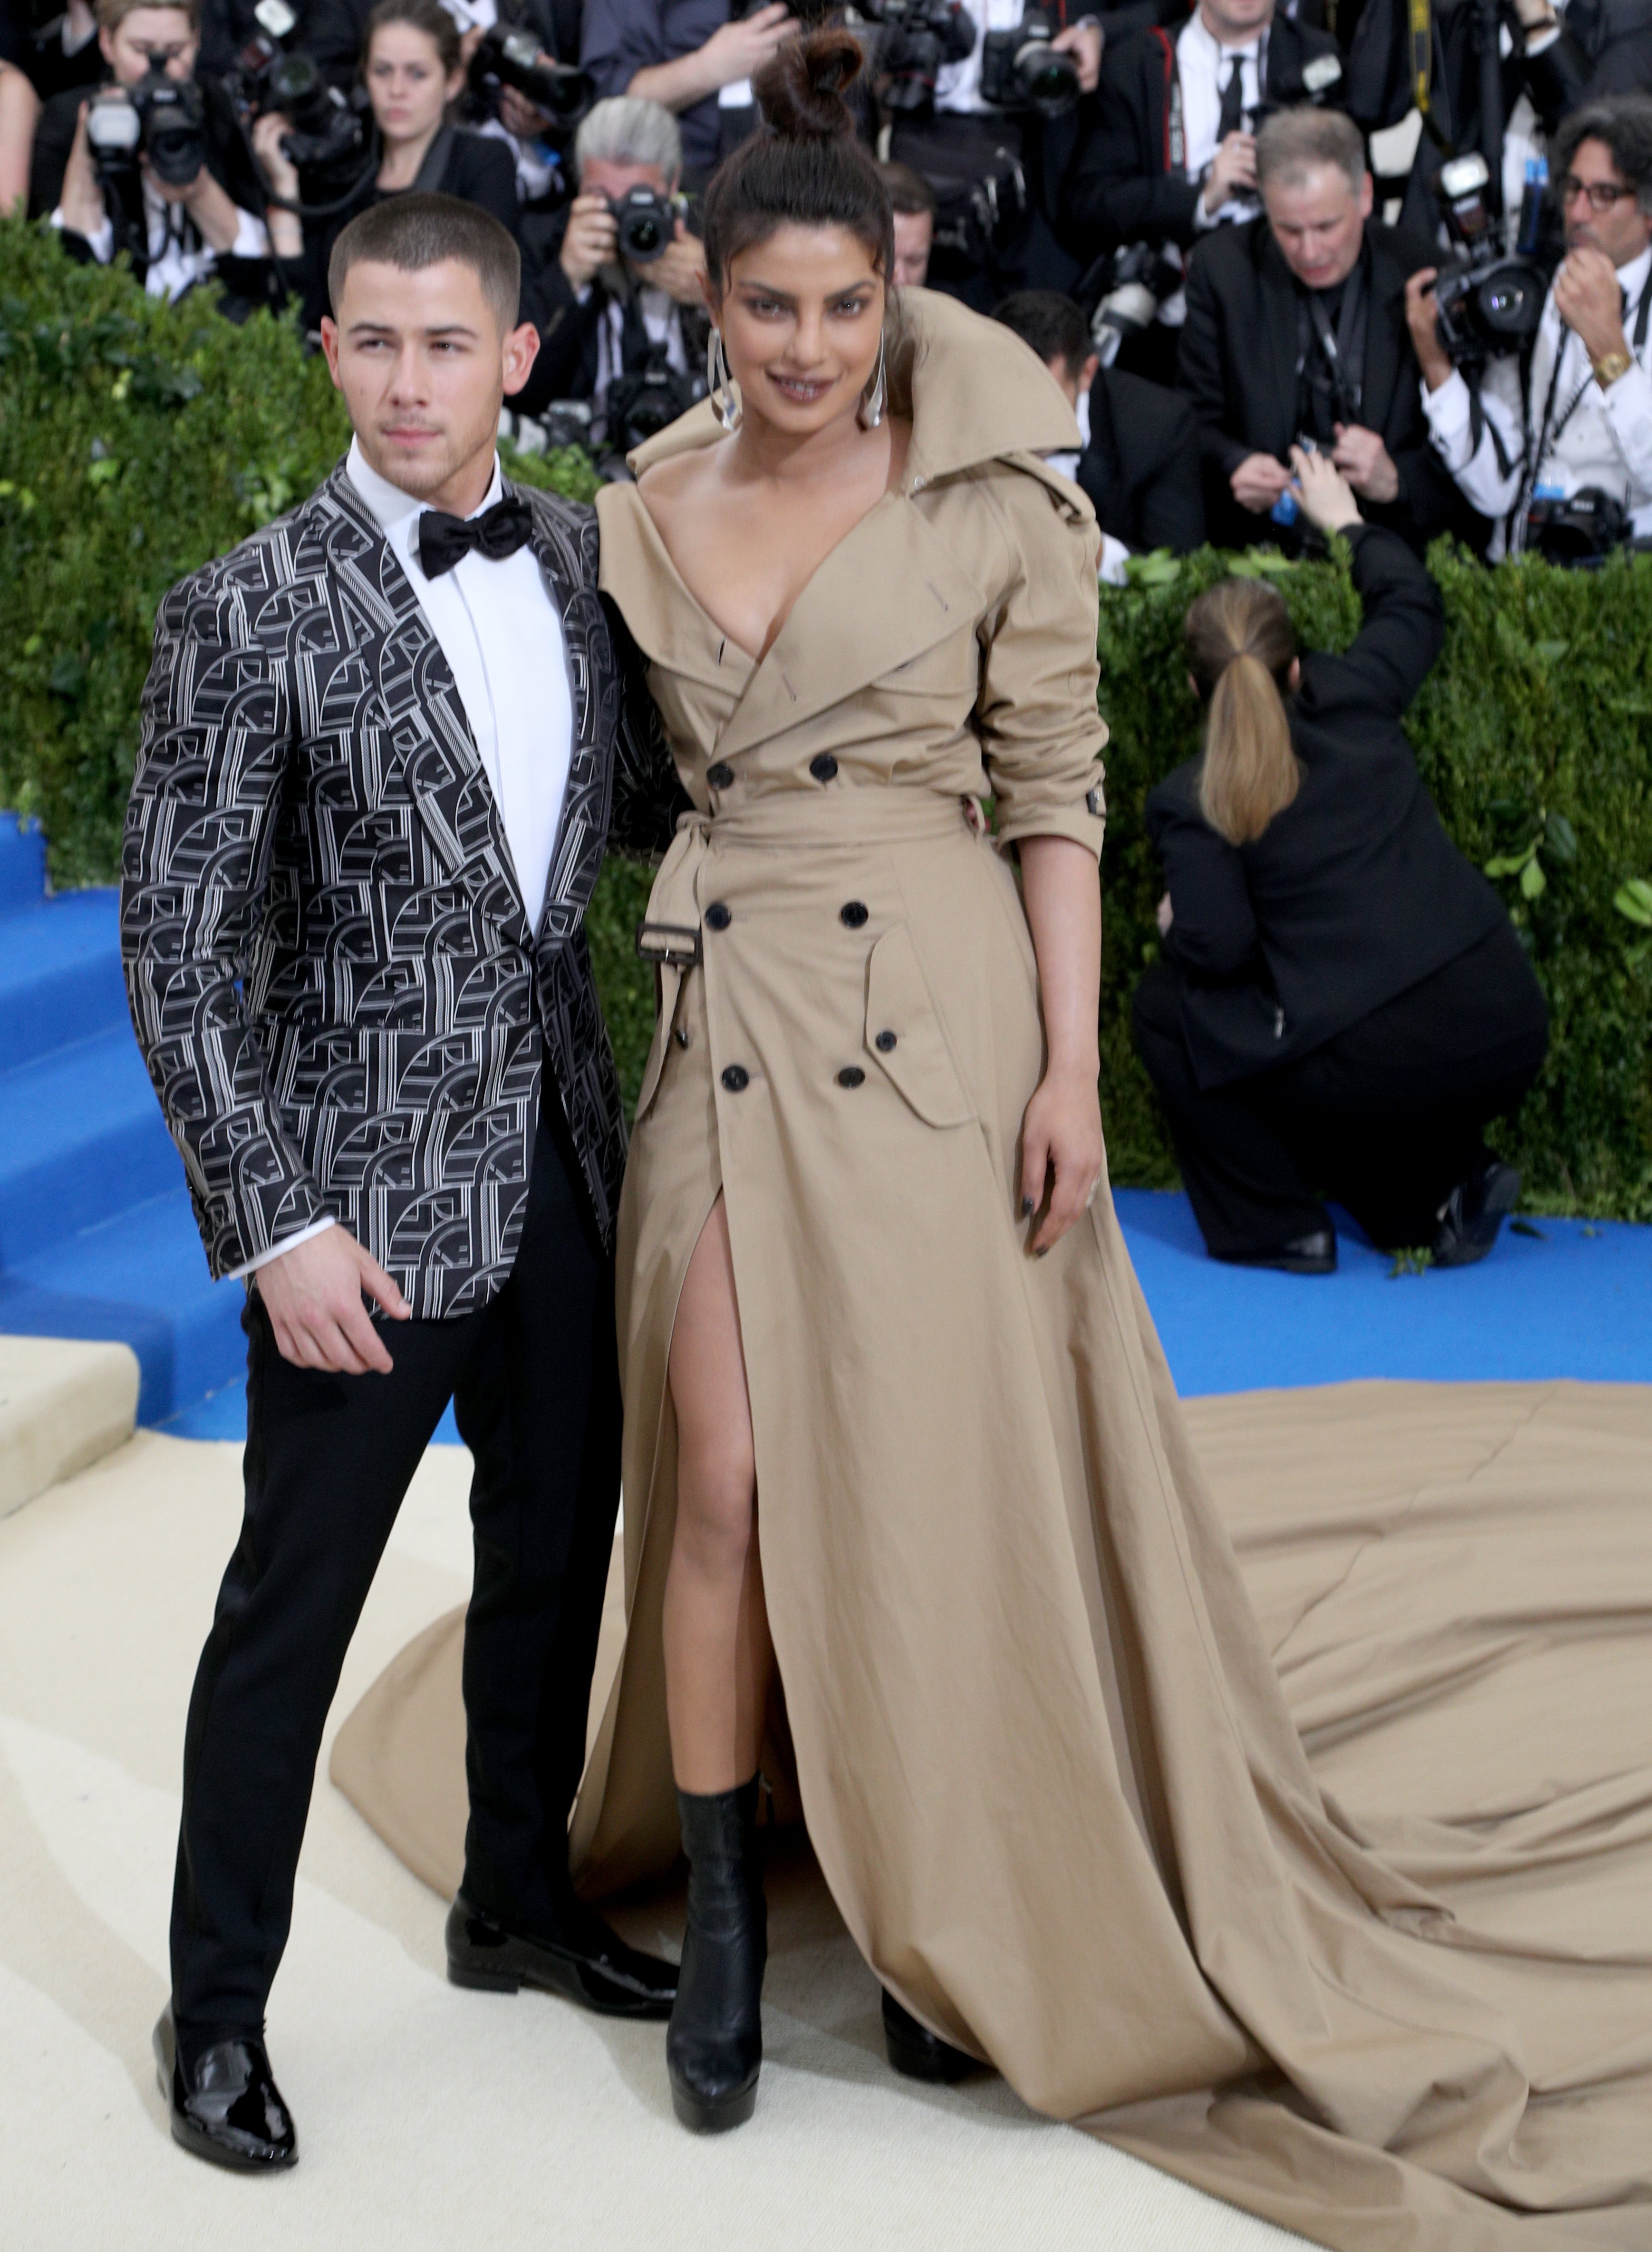 Nick Jonas and Priyanka Chopra arrive on the red carpet for the Met Gala